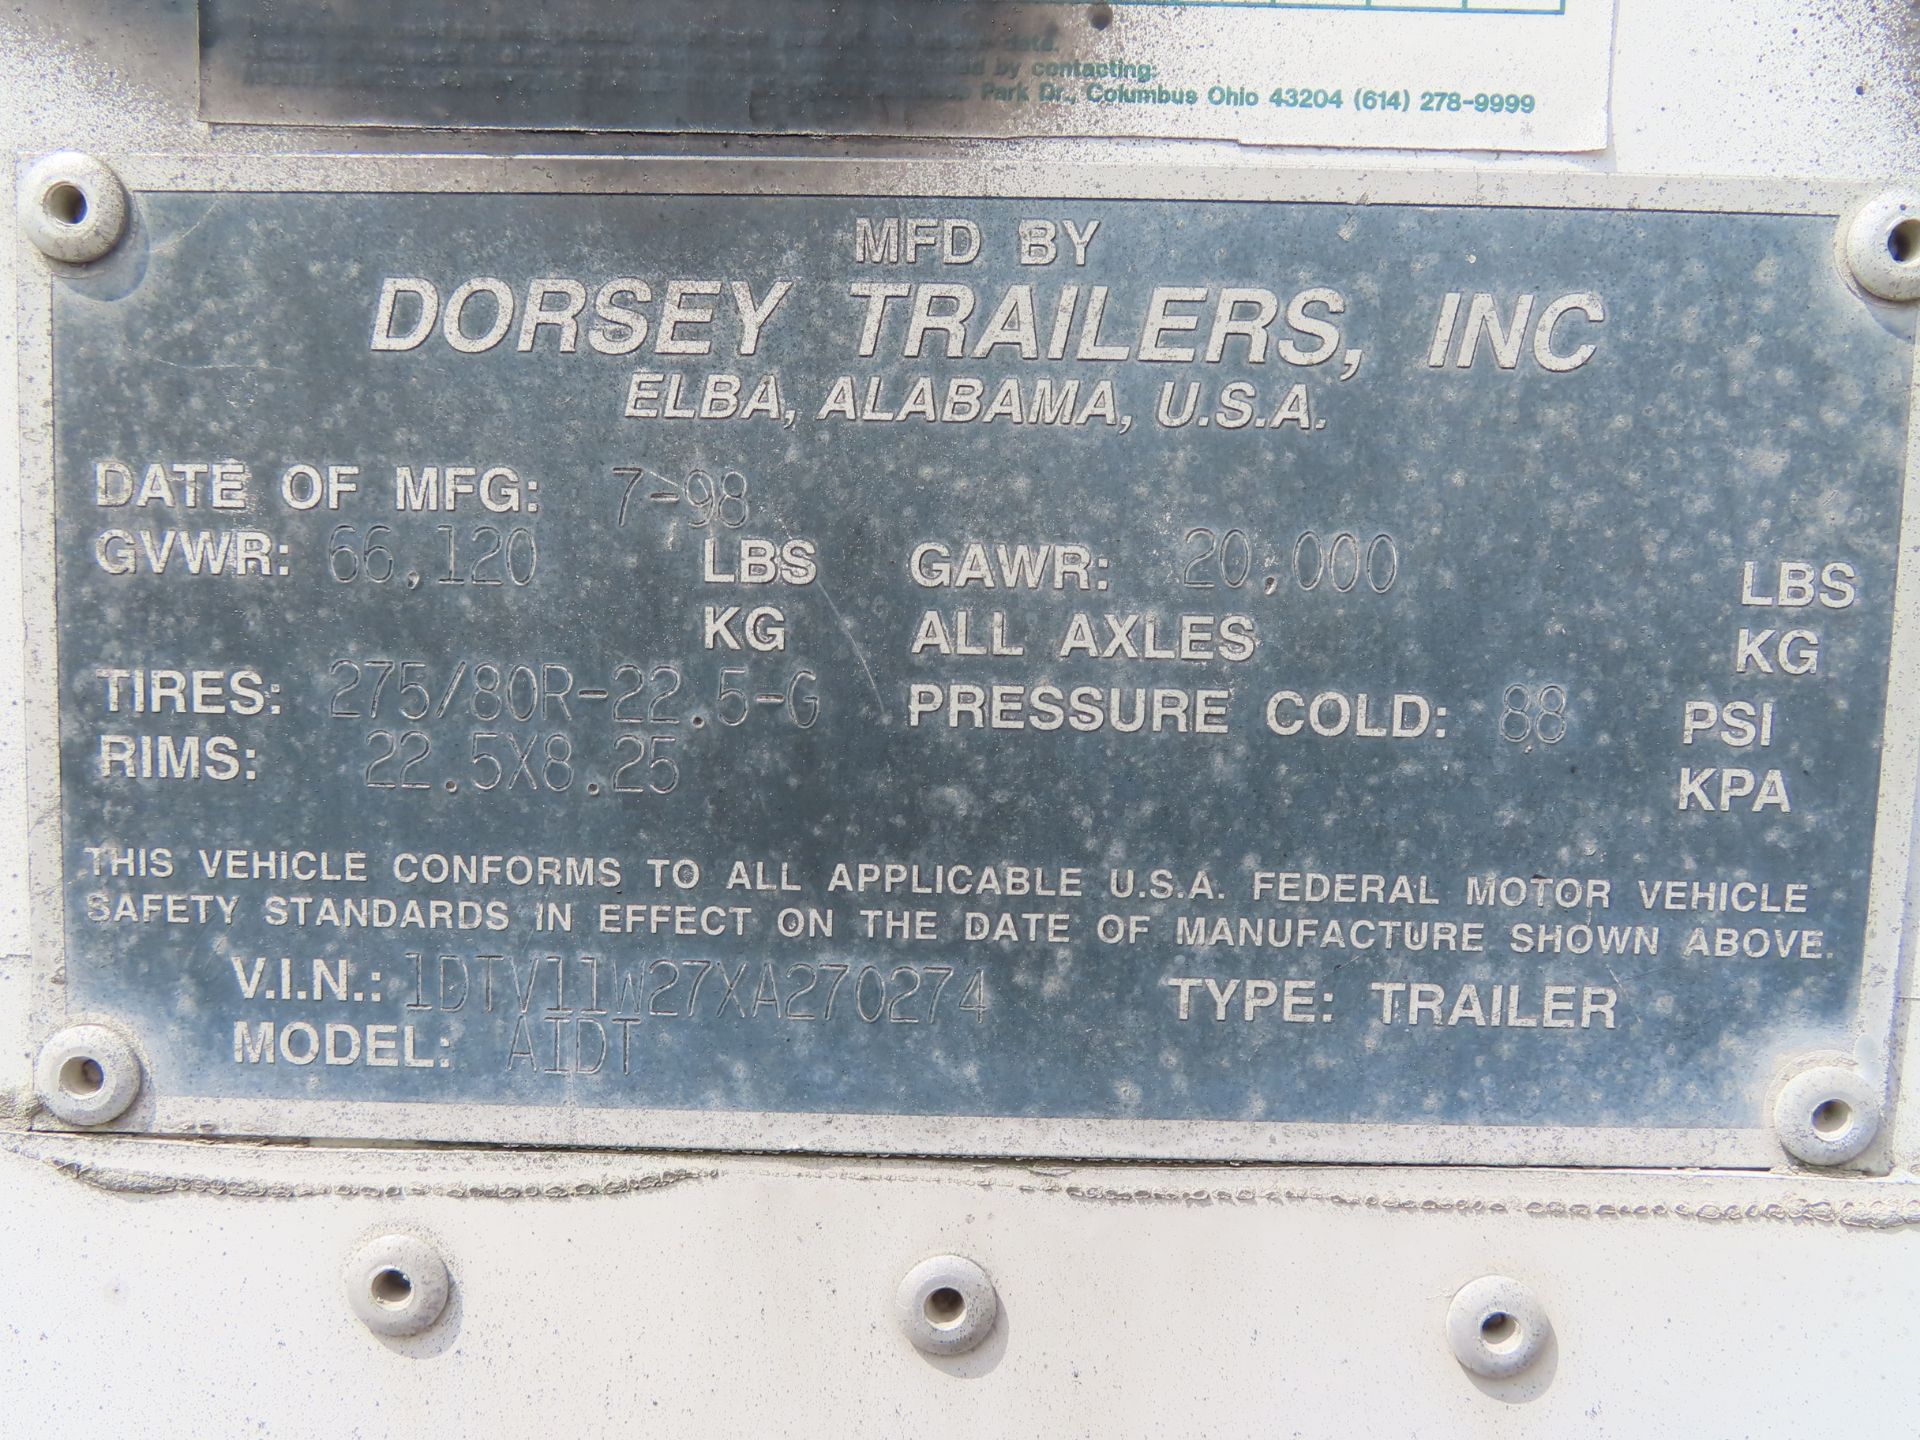 1999 Dorsey Semi Dry Van Trailer, model AIDT, 2 axle, VIN: 1DTV11W27XA270274, GVWR 66,120, rear roll - Image 4 of 4